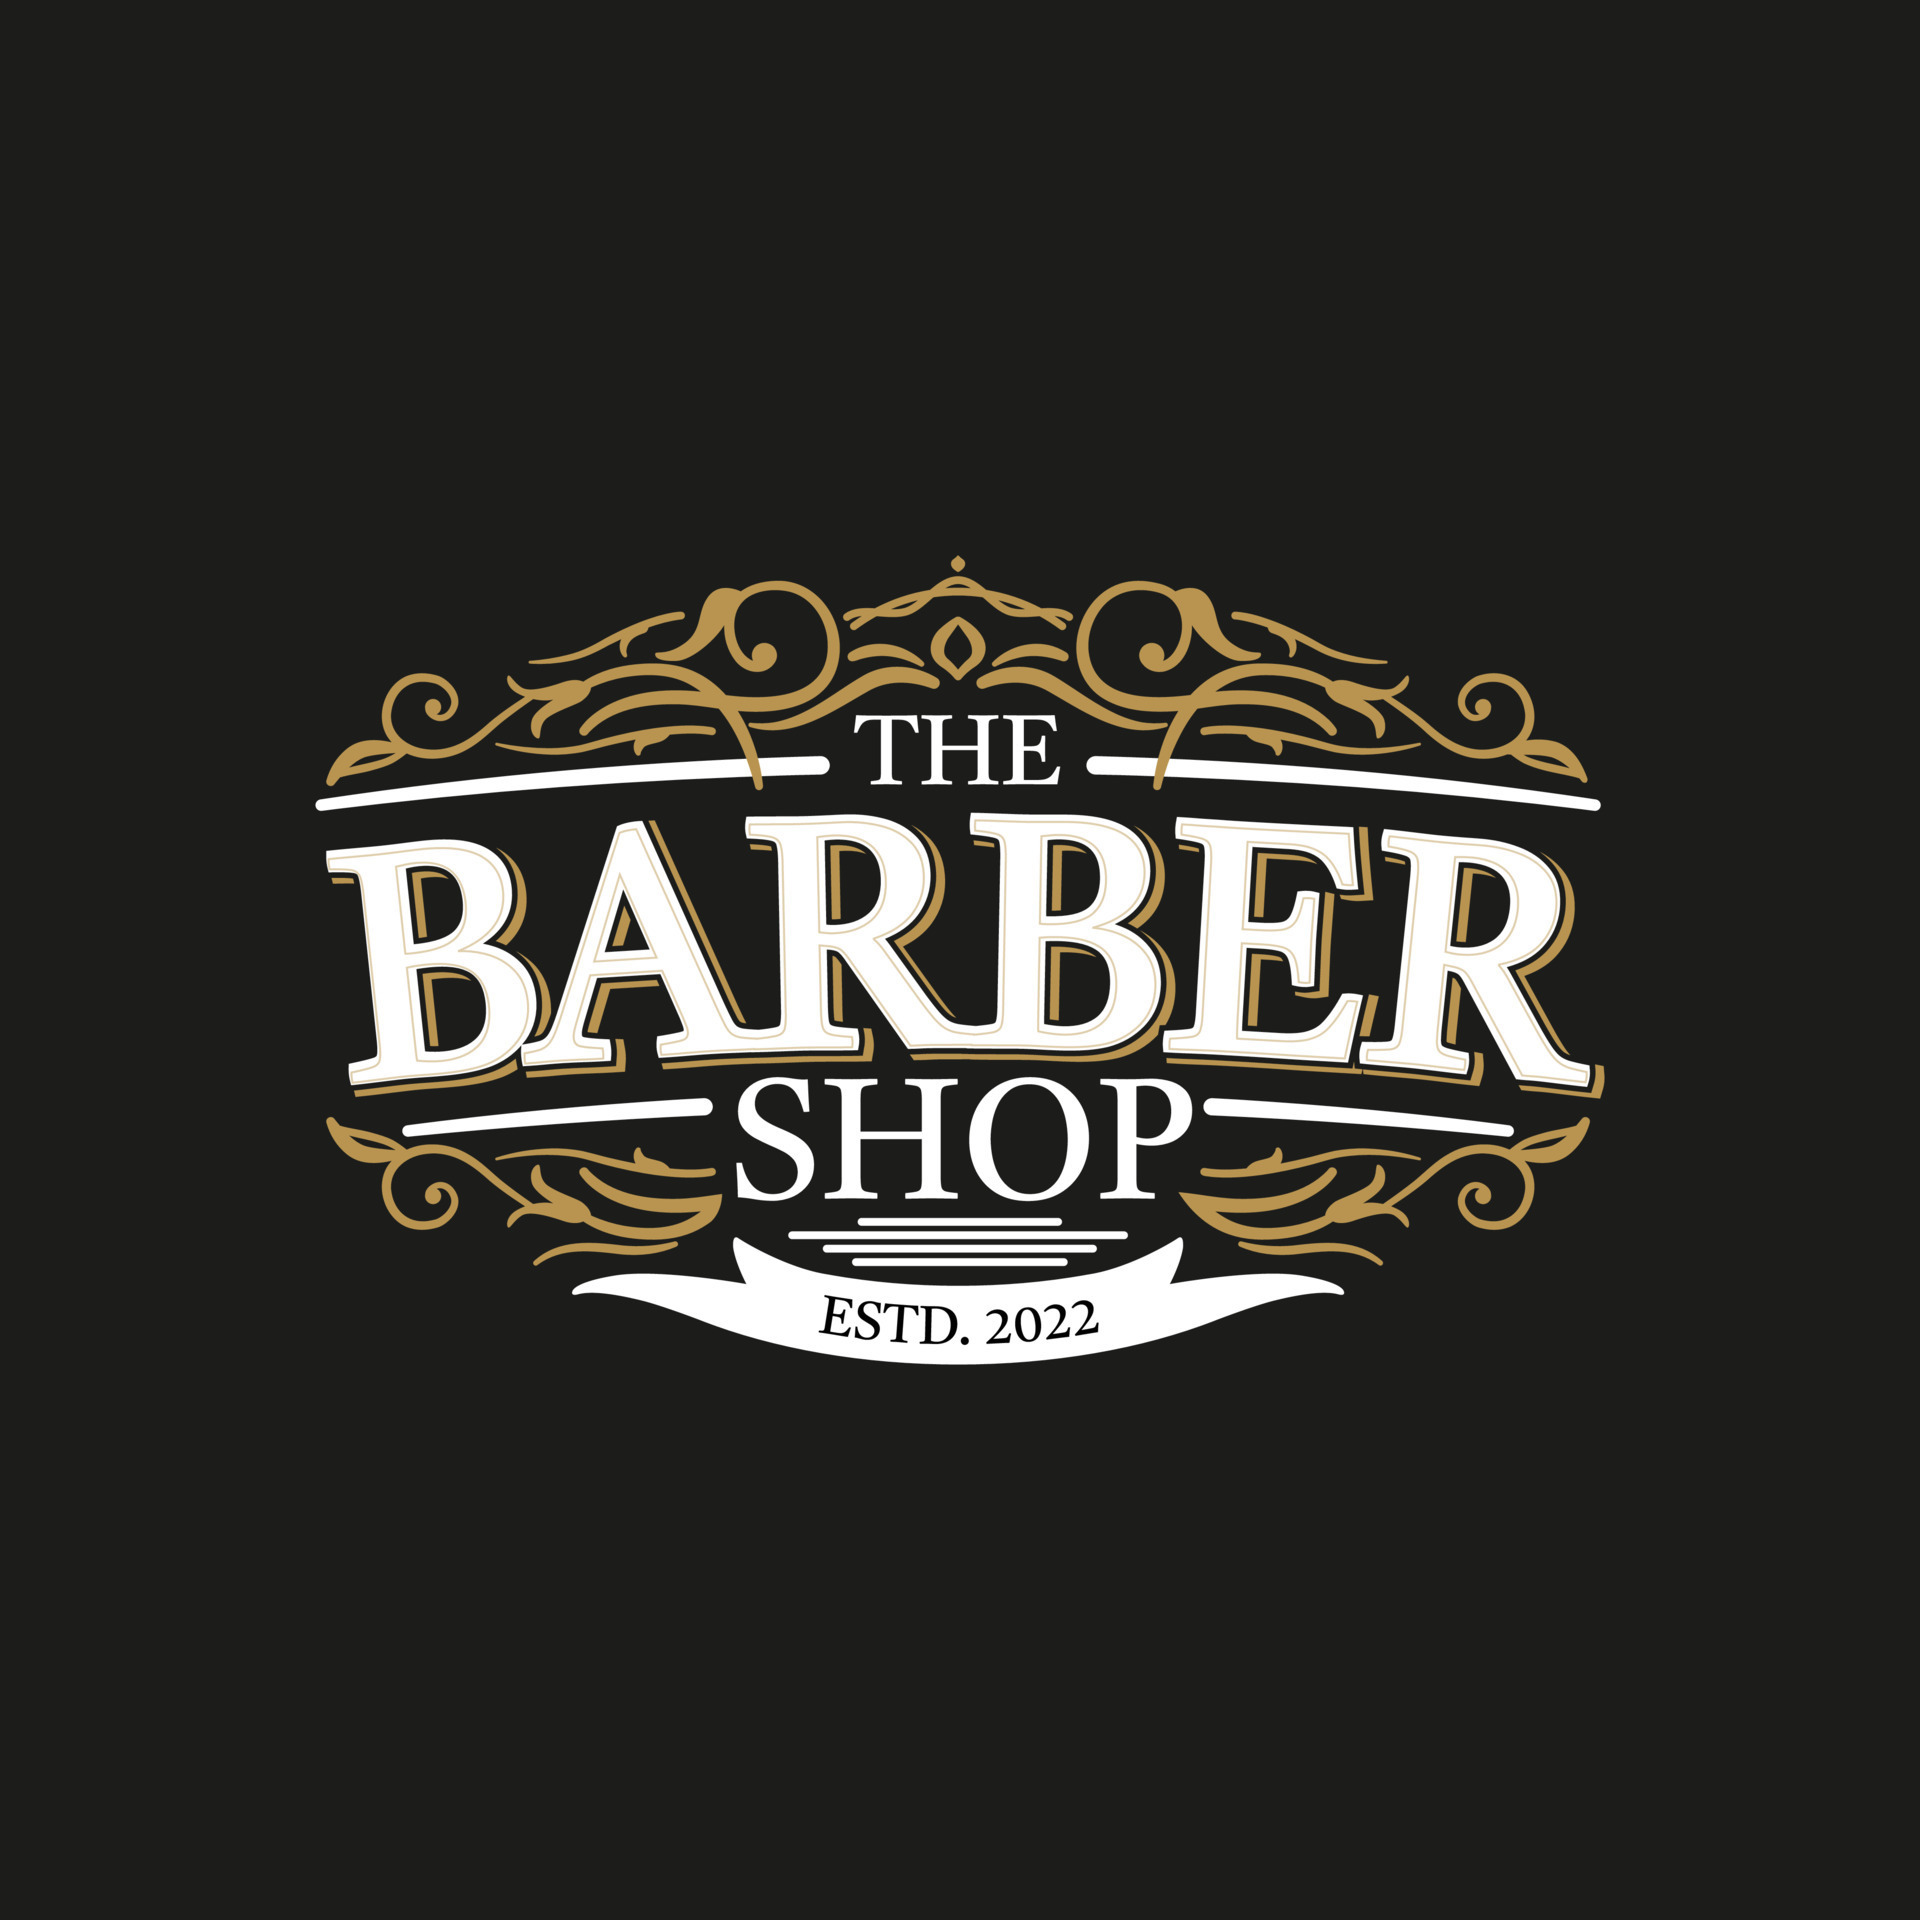 Barbershop ornate vintage victorian typography logo design with ...